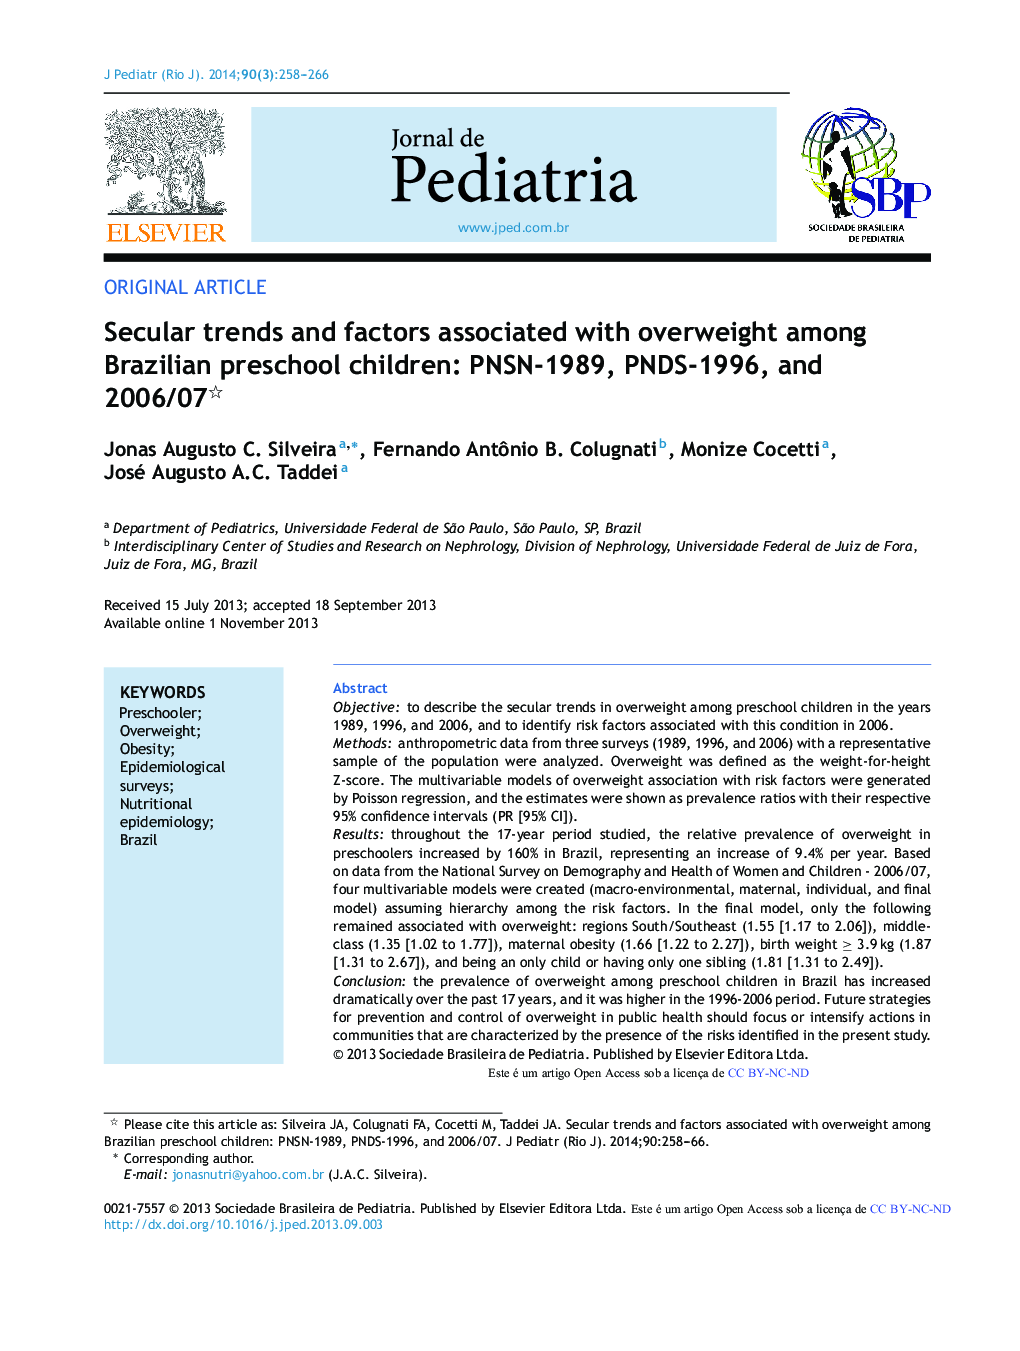 Secular trends and factors associated with overweight among Brazilian preschool children: PNSN-1989, PNDS-1996, and 2006/07 